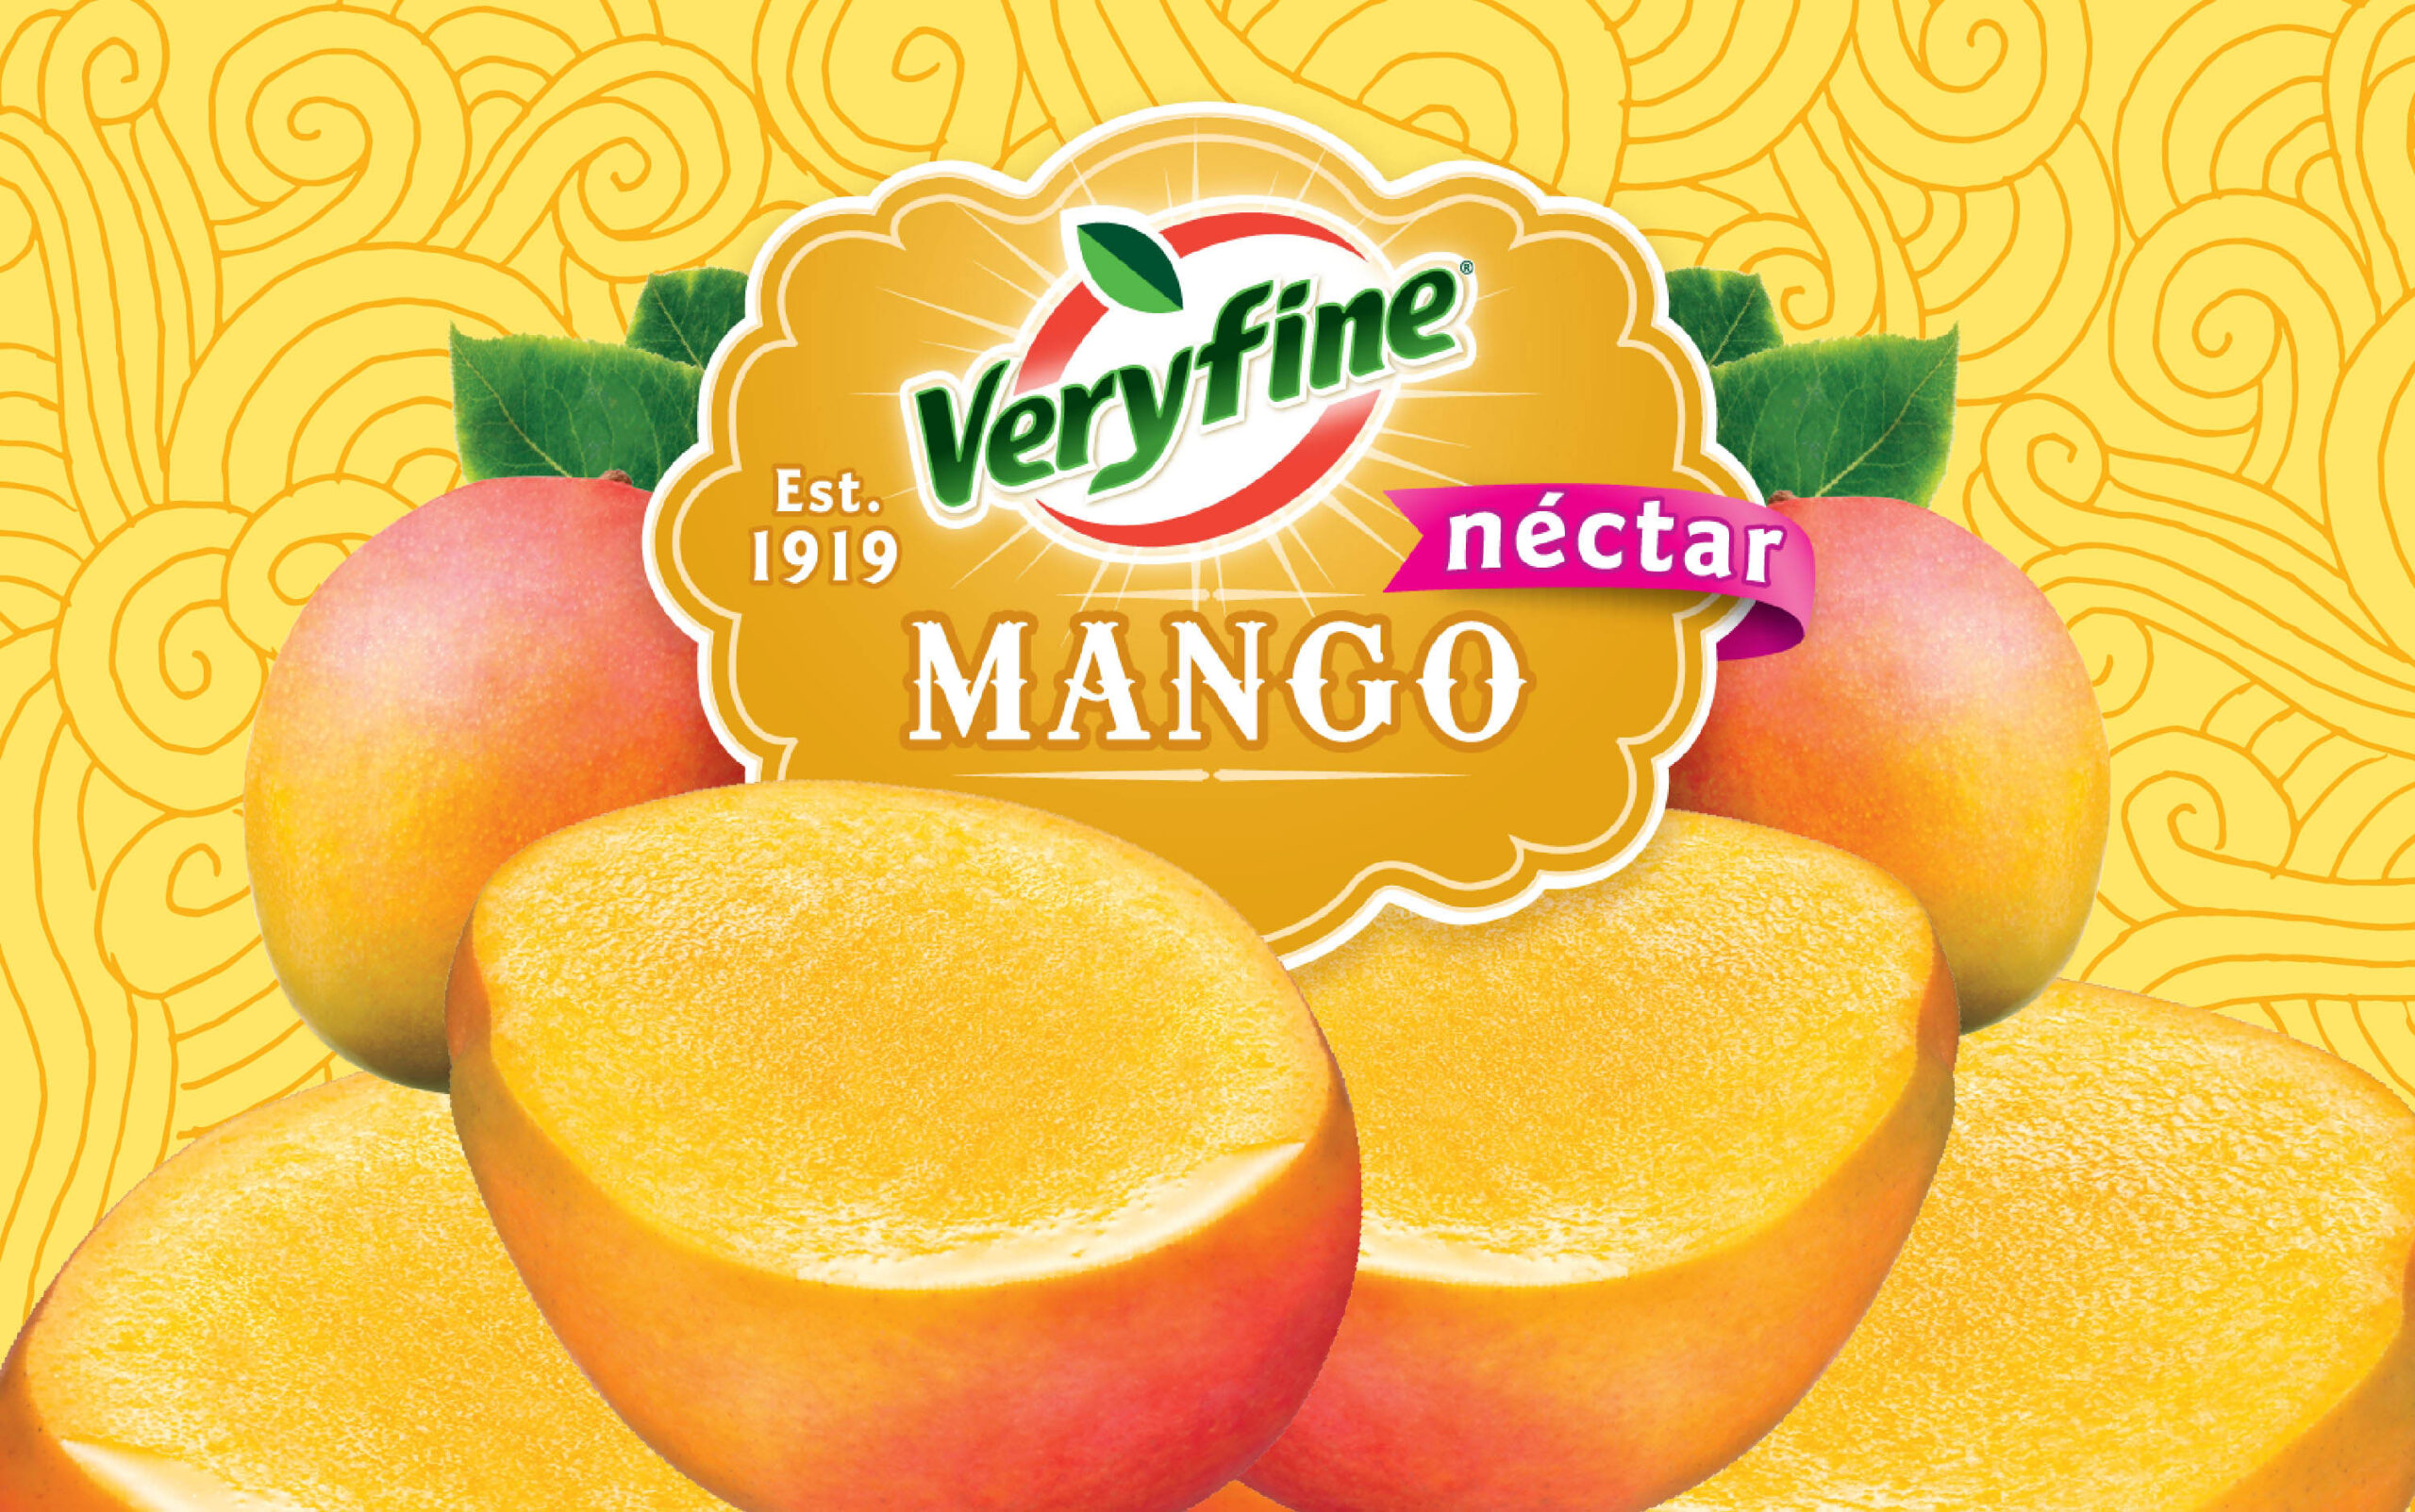 Mango Juice label design for Veryfine